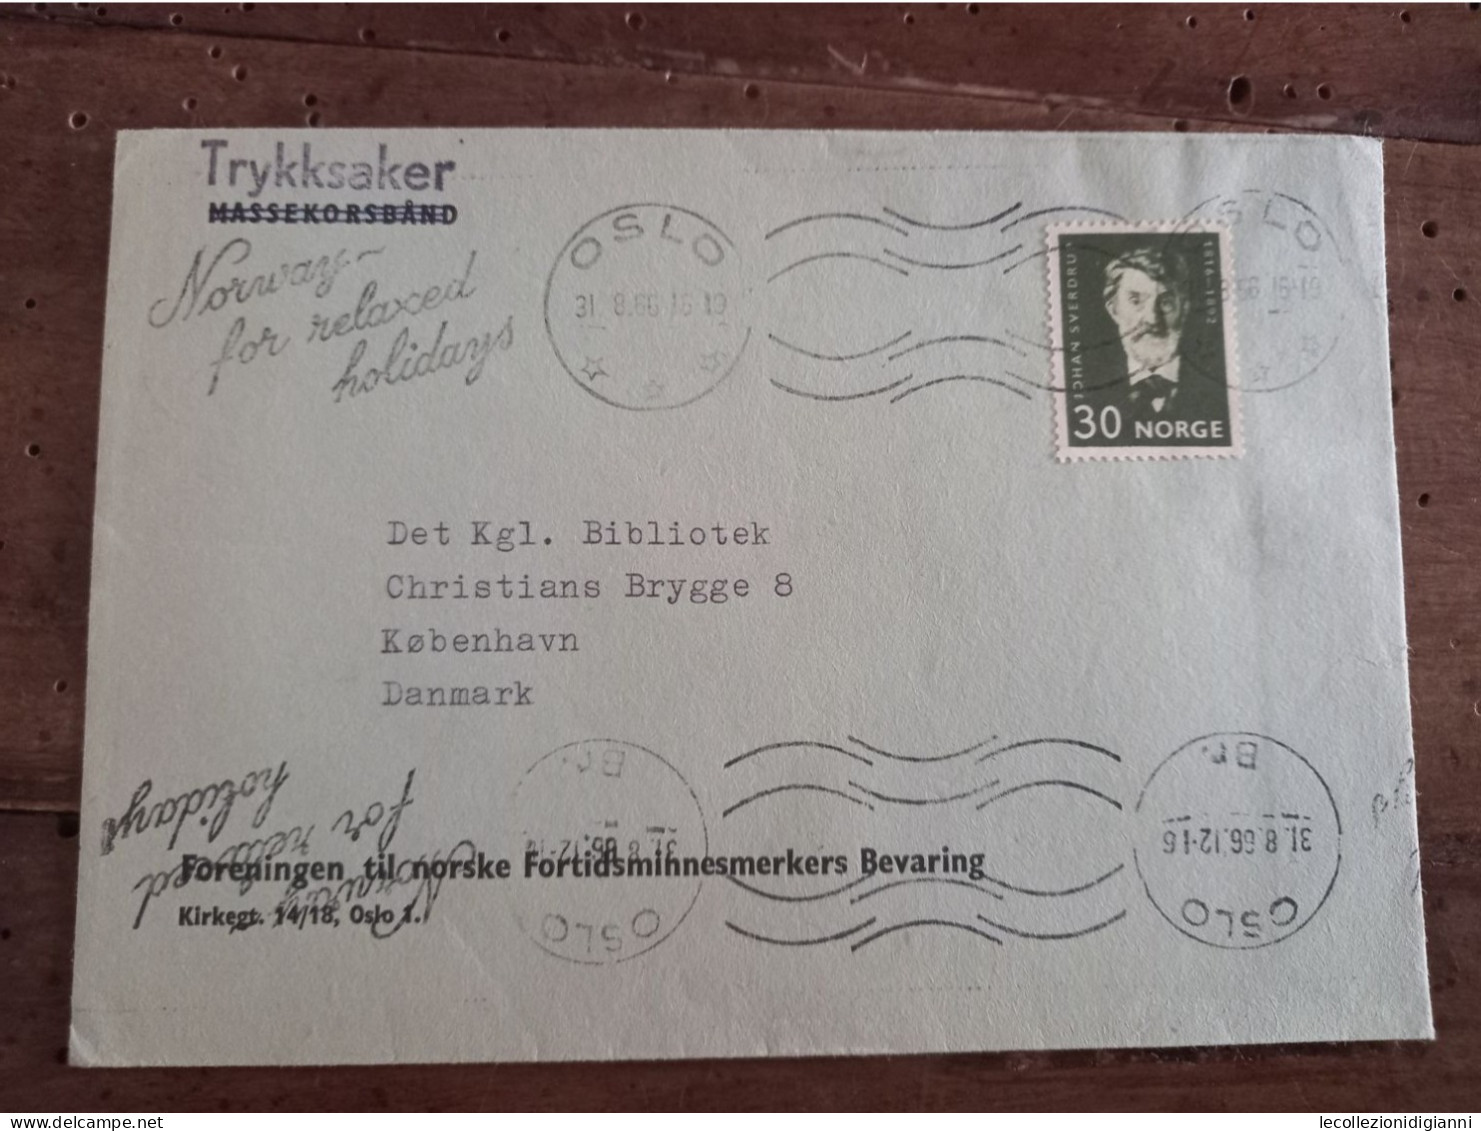 838) Norge Busta Stampe Trykksaker 1966 Viaggiata Da Oslo A Copenaghen Timbro Pubblicità Norway For Relaxed Holidays - Storia Postale